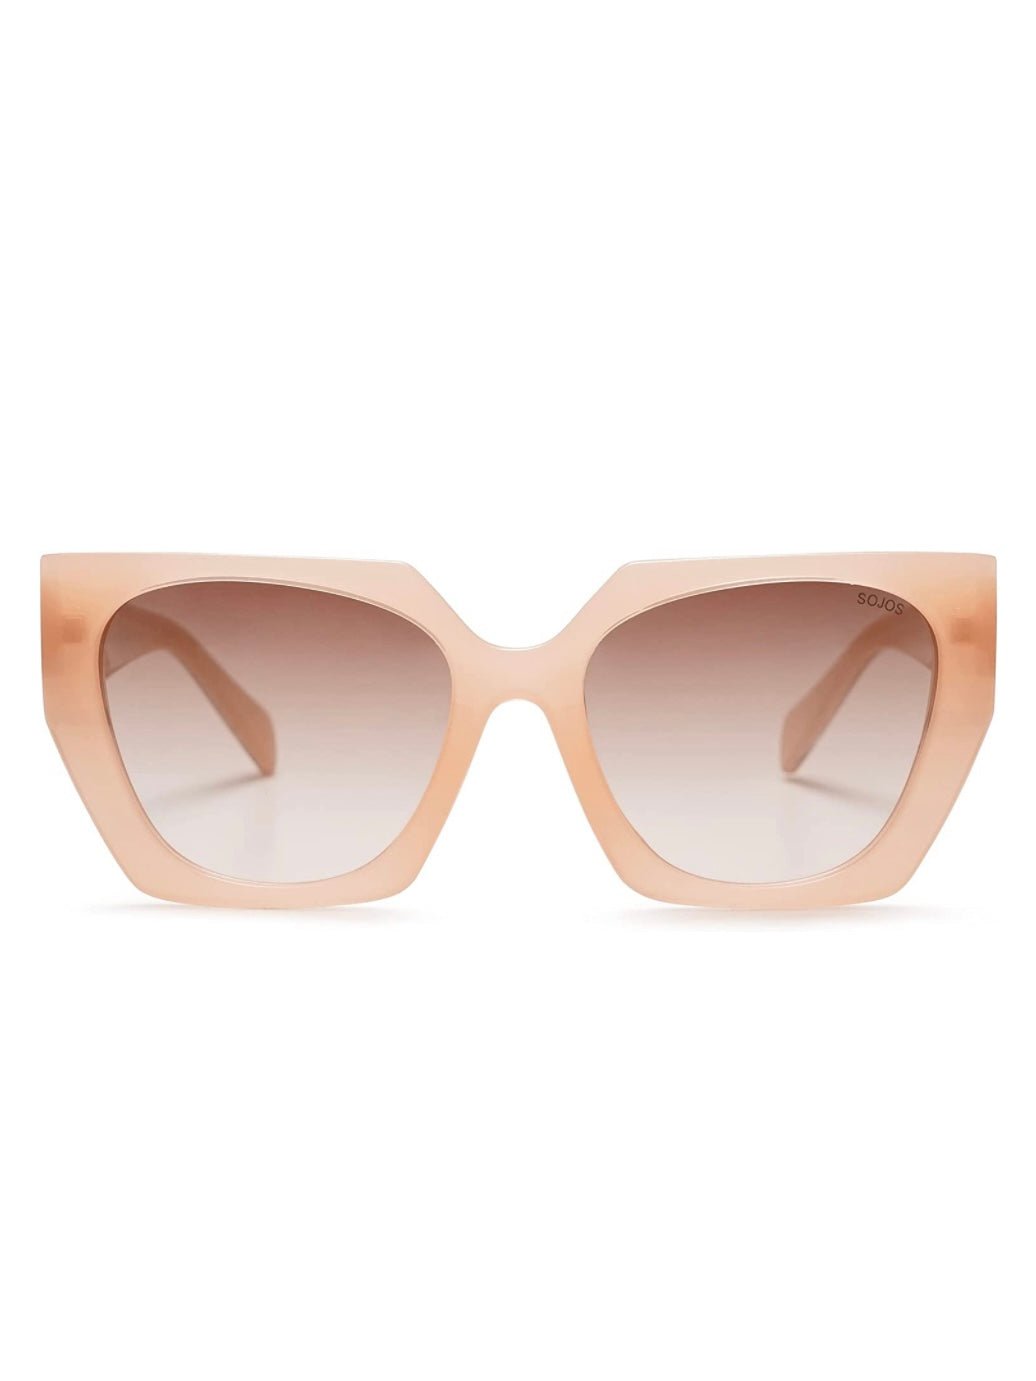 Pink big square sunglasses - Wapas